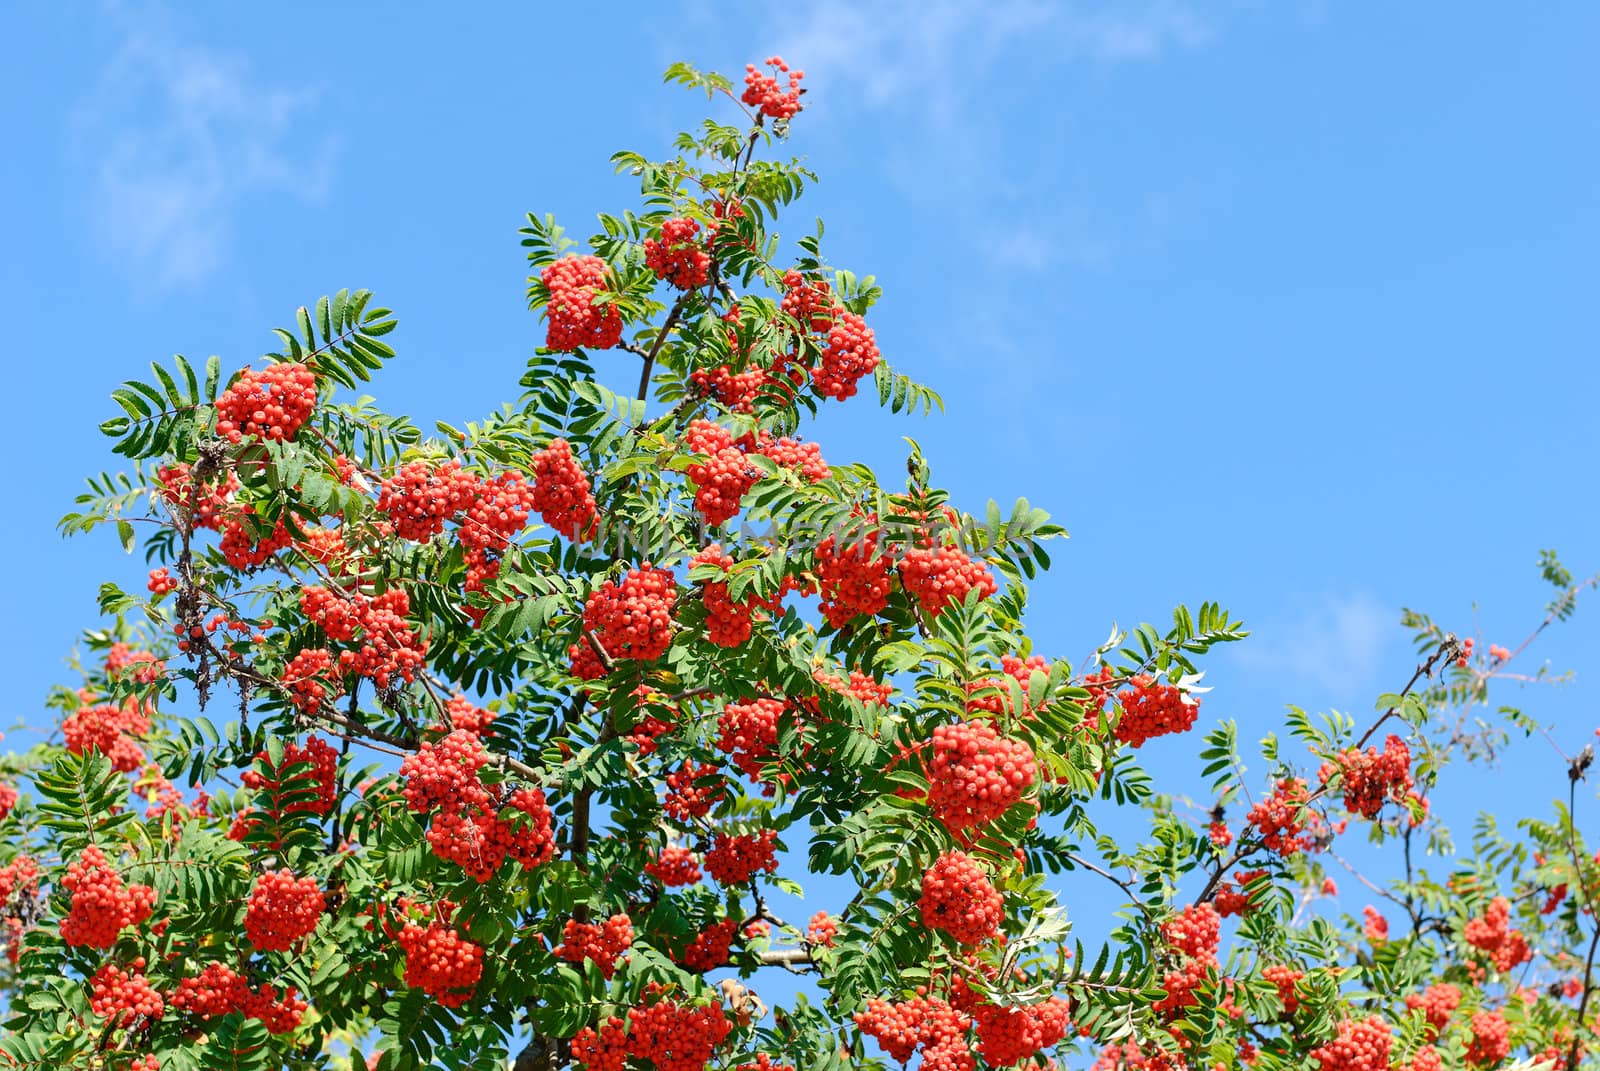 Rowan Tree with Berries  by Nemo1024